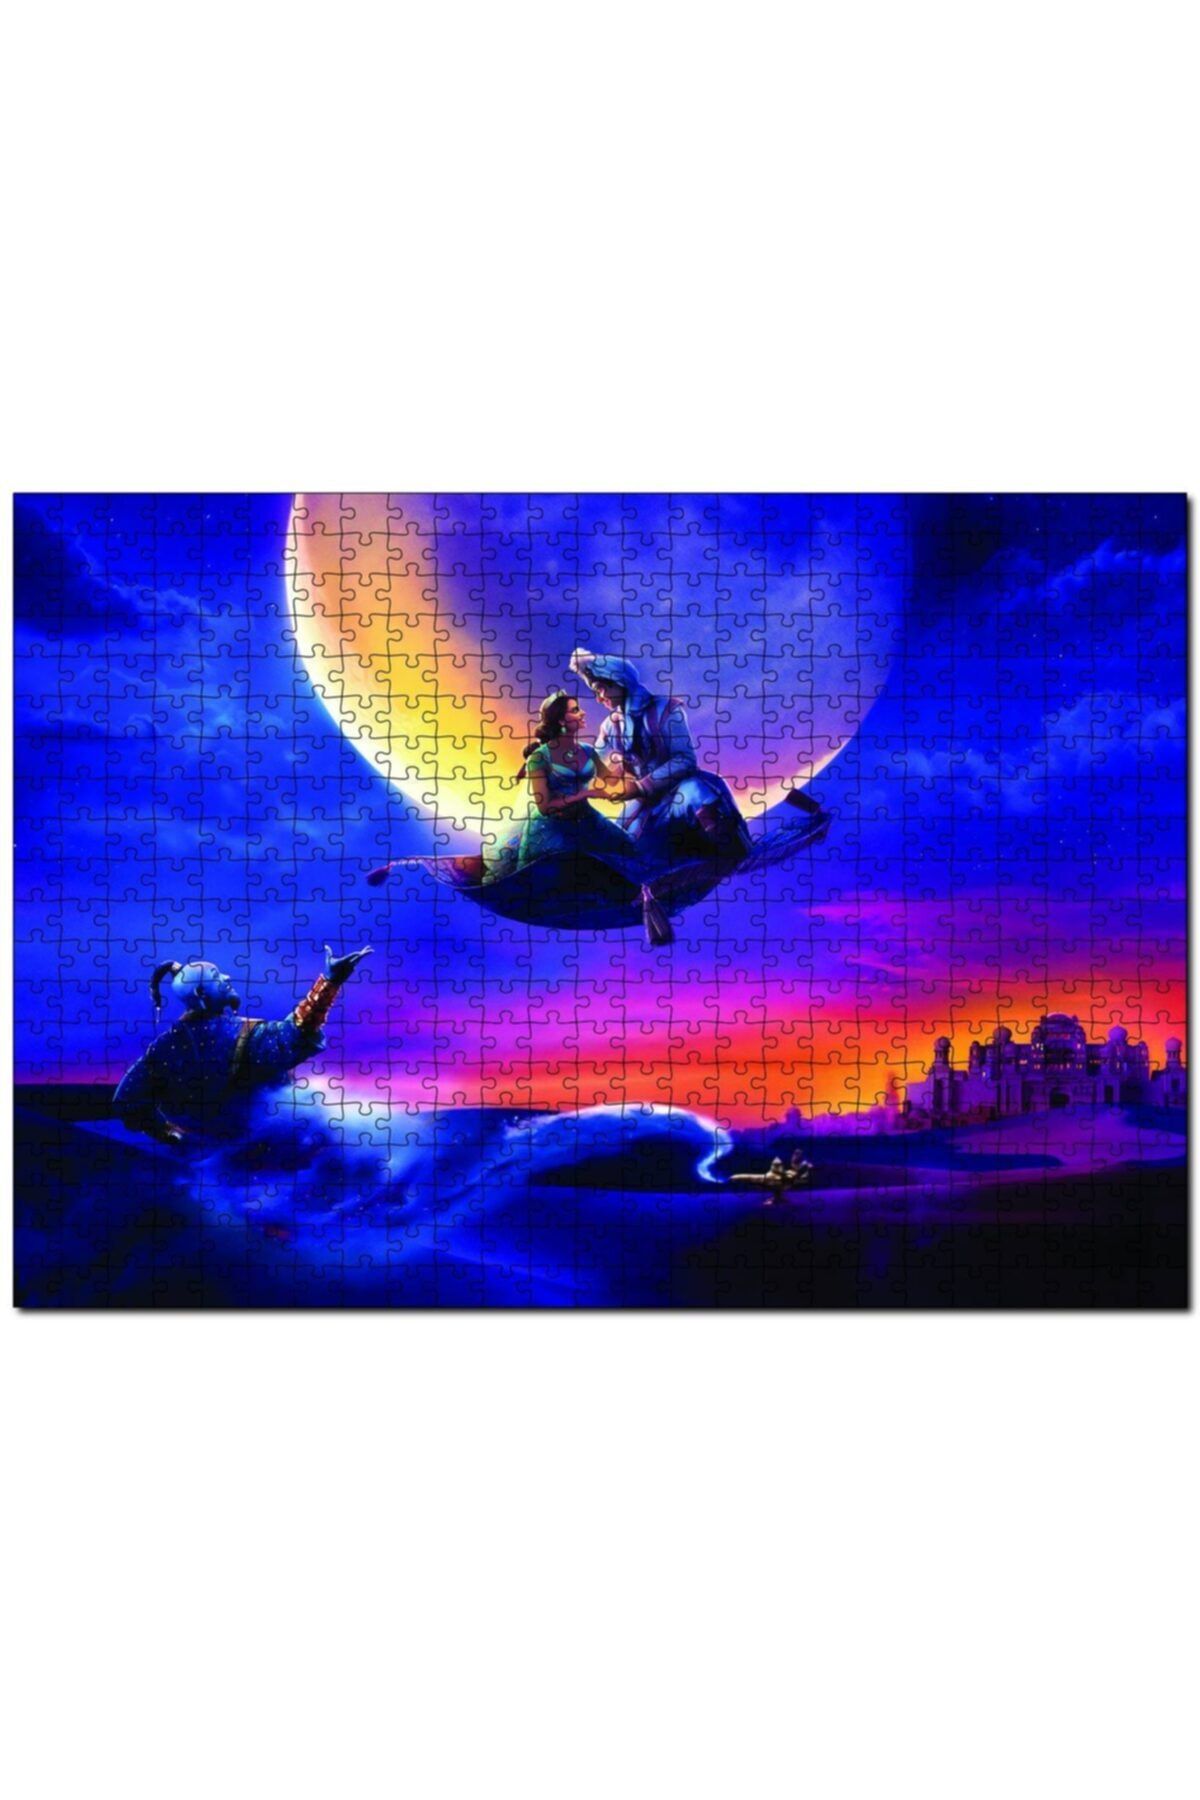 Cakapuzzle Lambada Büyü Aladdin Ve Prenses Yasemin 1000 Parça Puzzle Yapboz Mdf(ahşap)